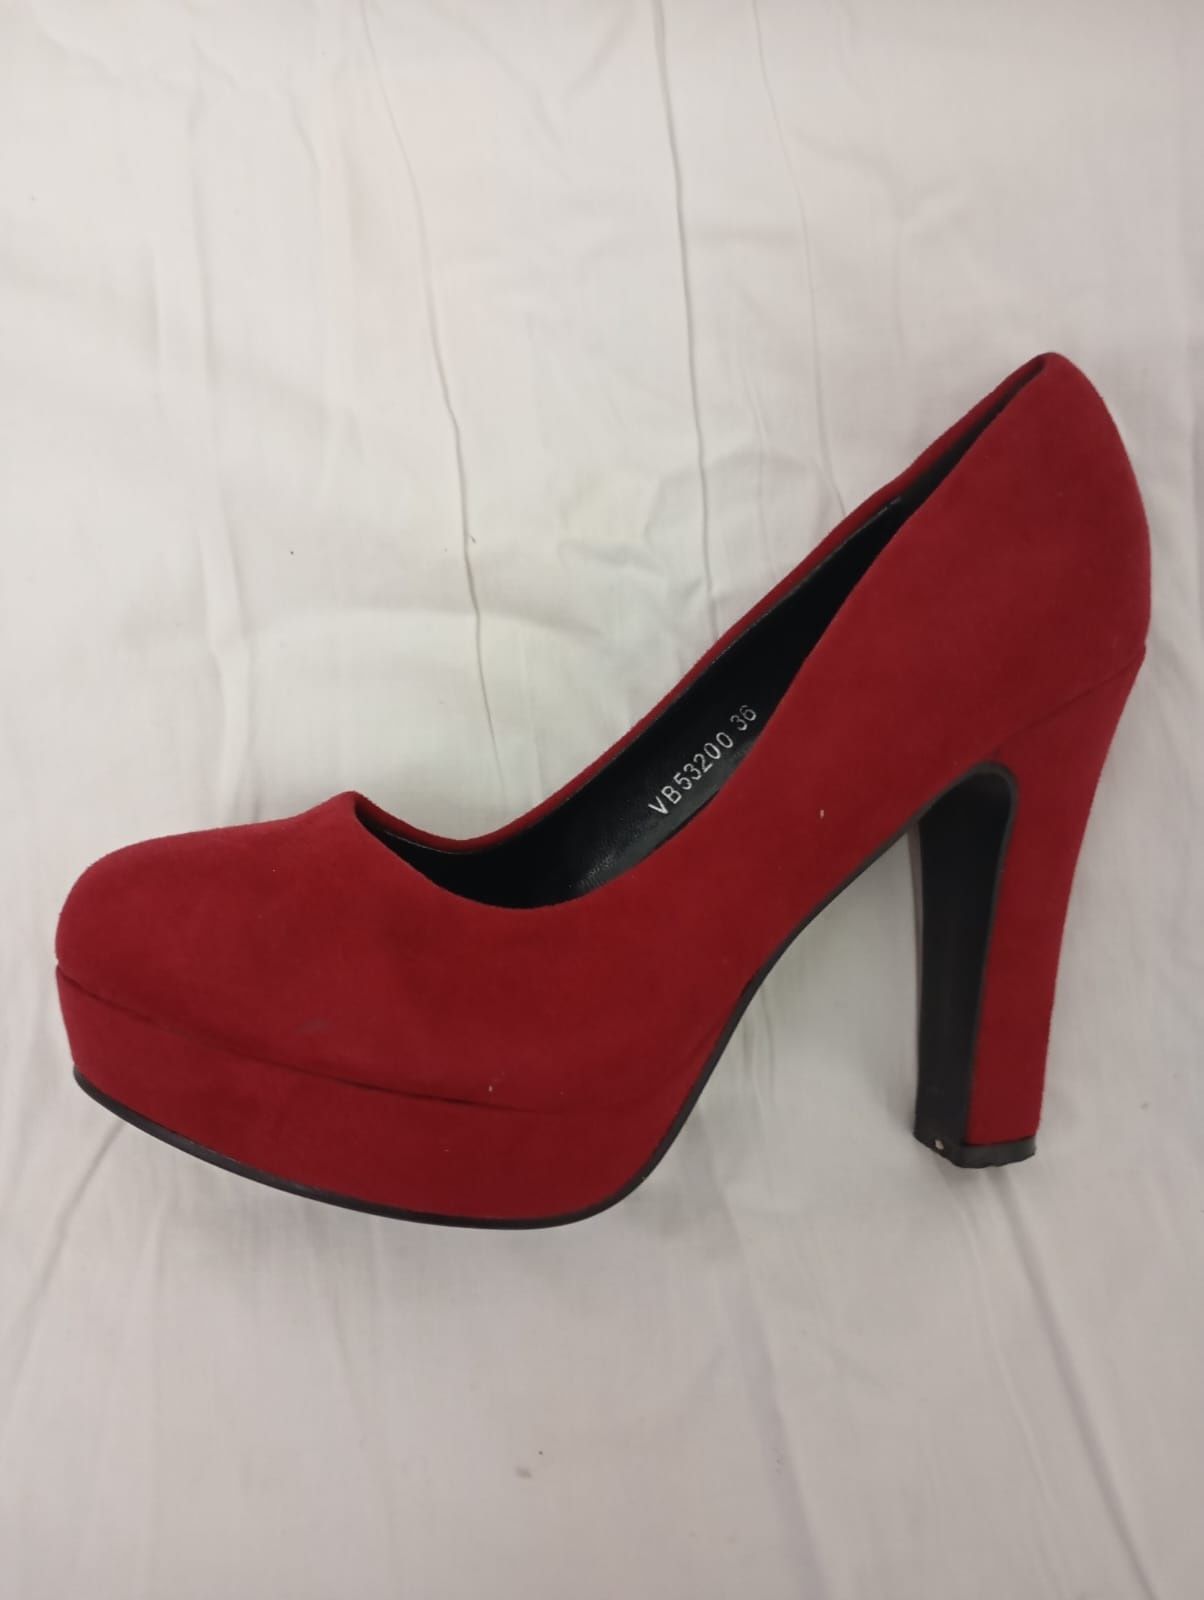 Pantofii scufitei roșii